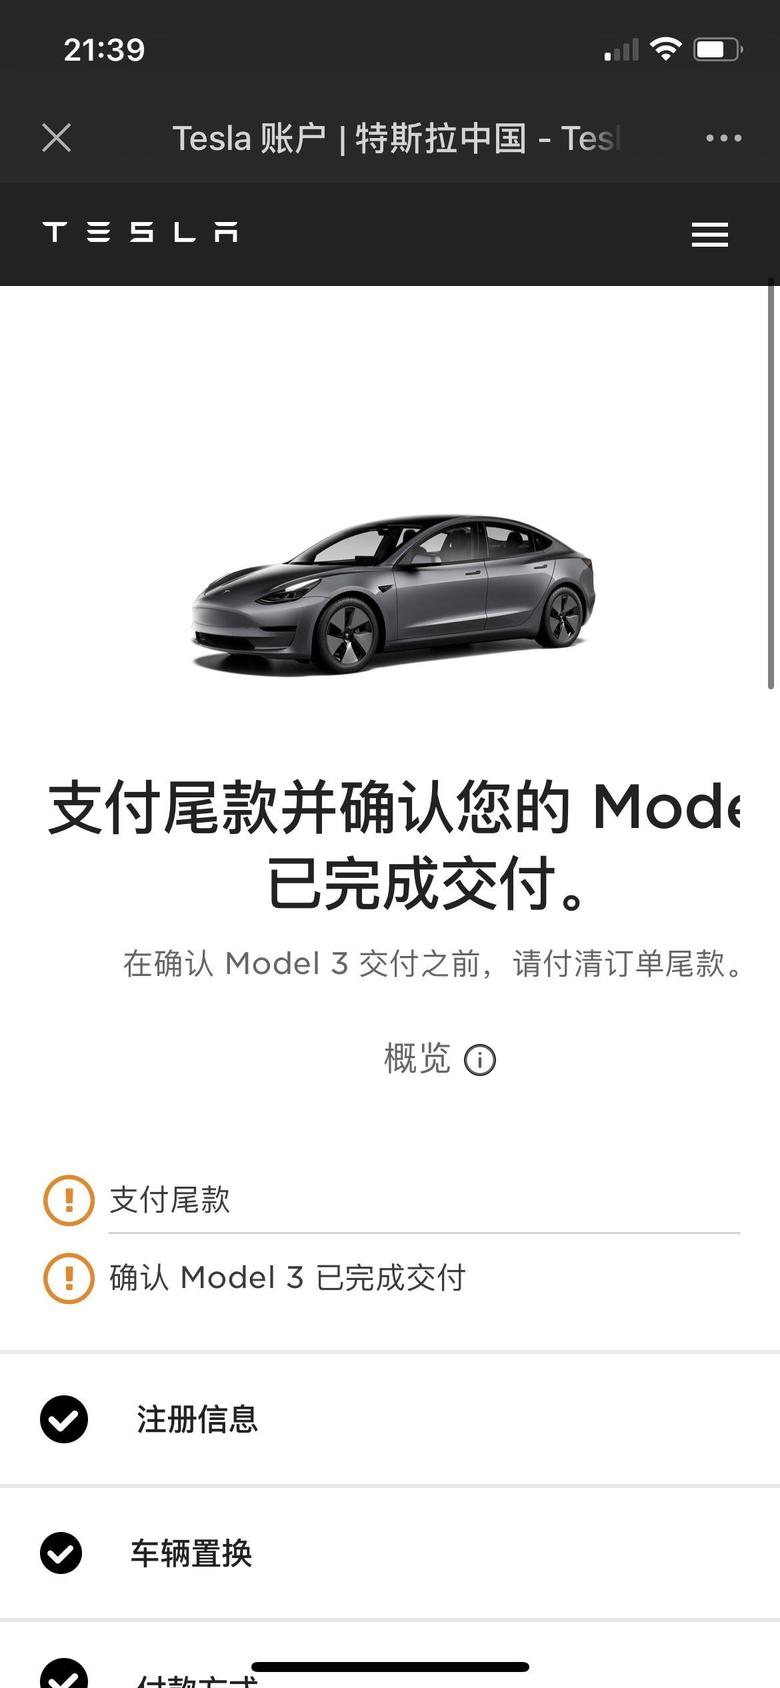 model 3 坐标广州2月15号订车今天通知匹配上了周末交付开心